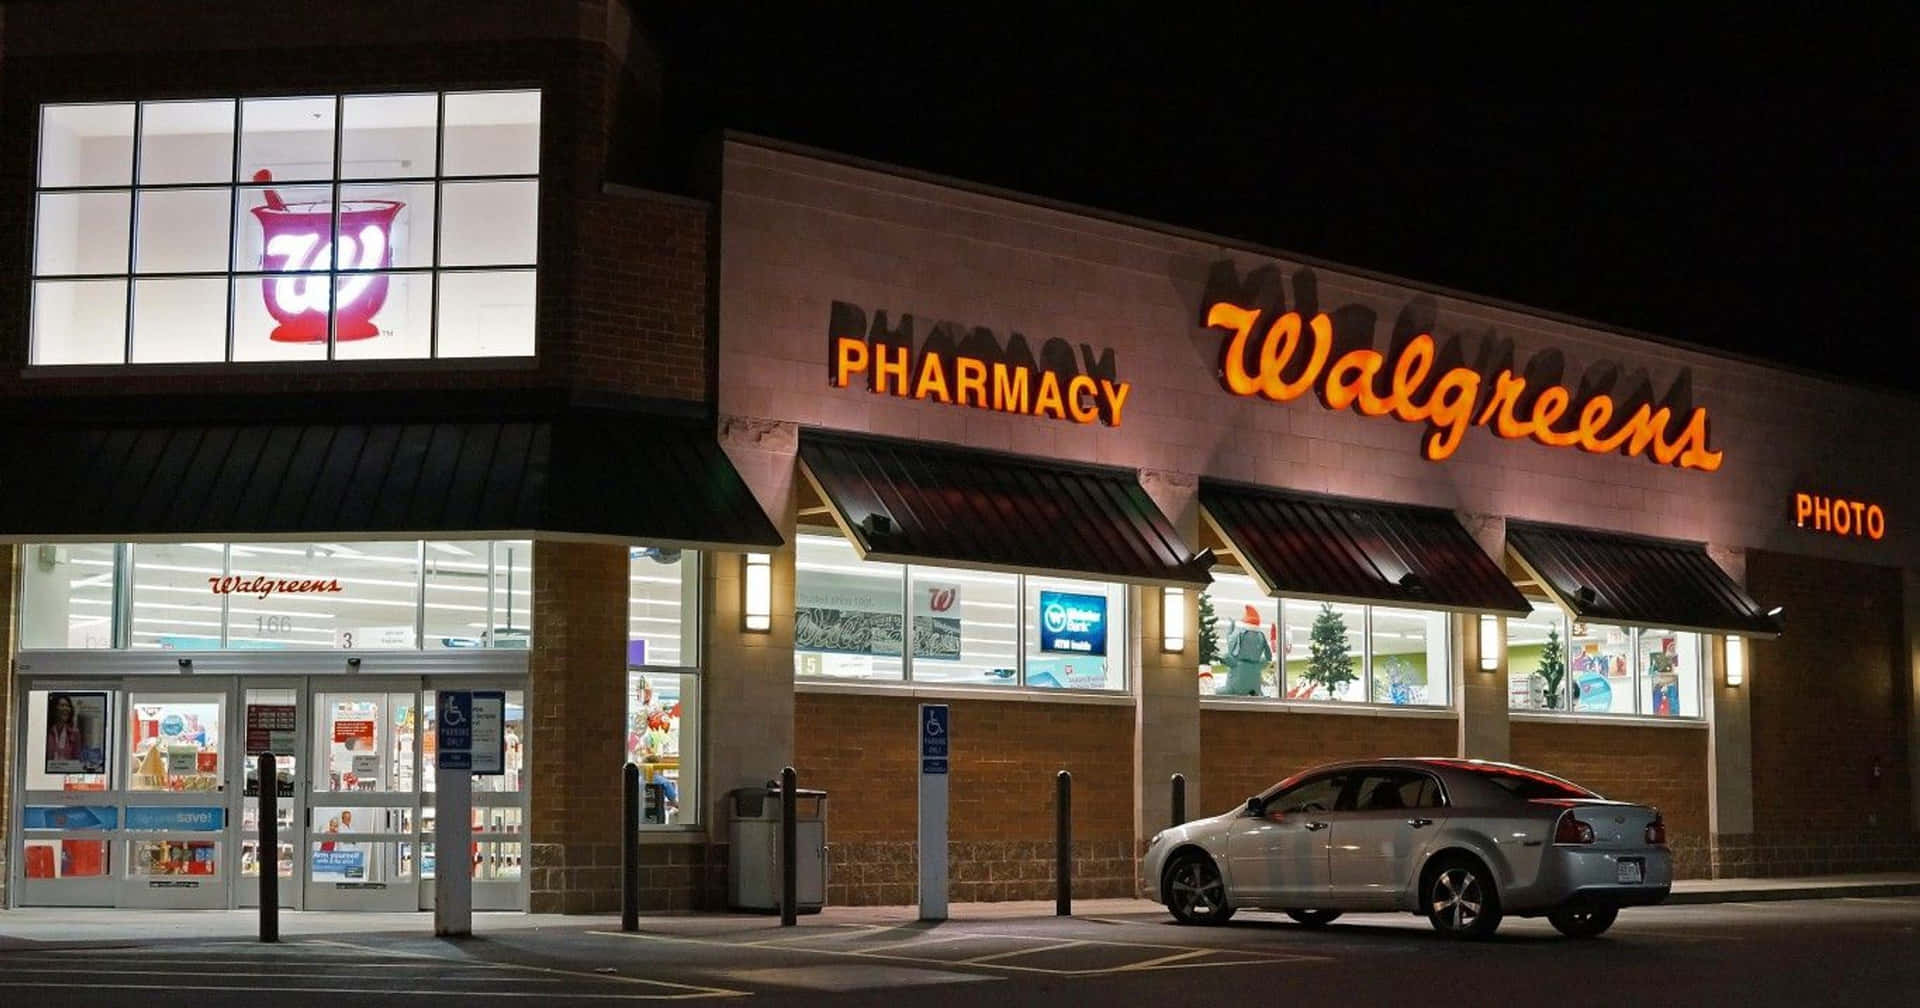 A Walgreens Pharmacy At Night